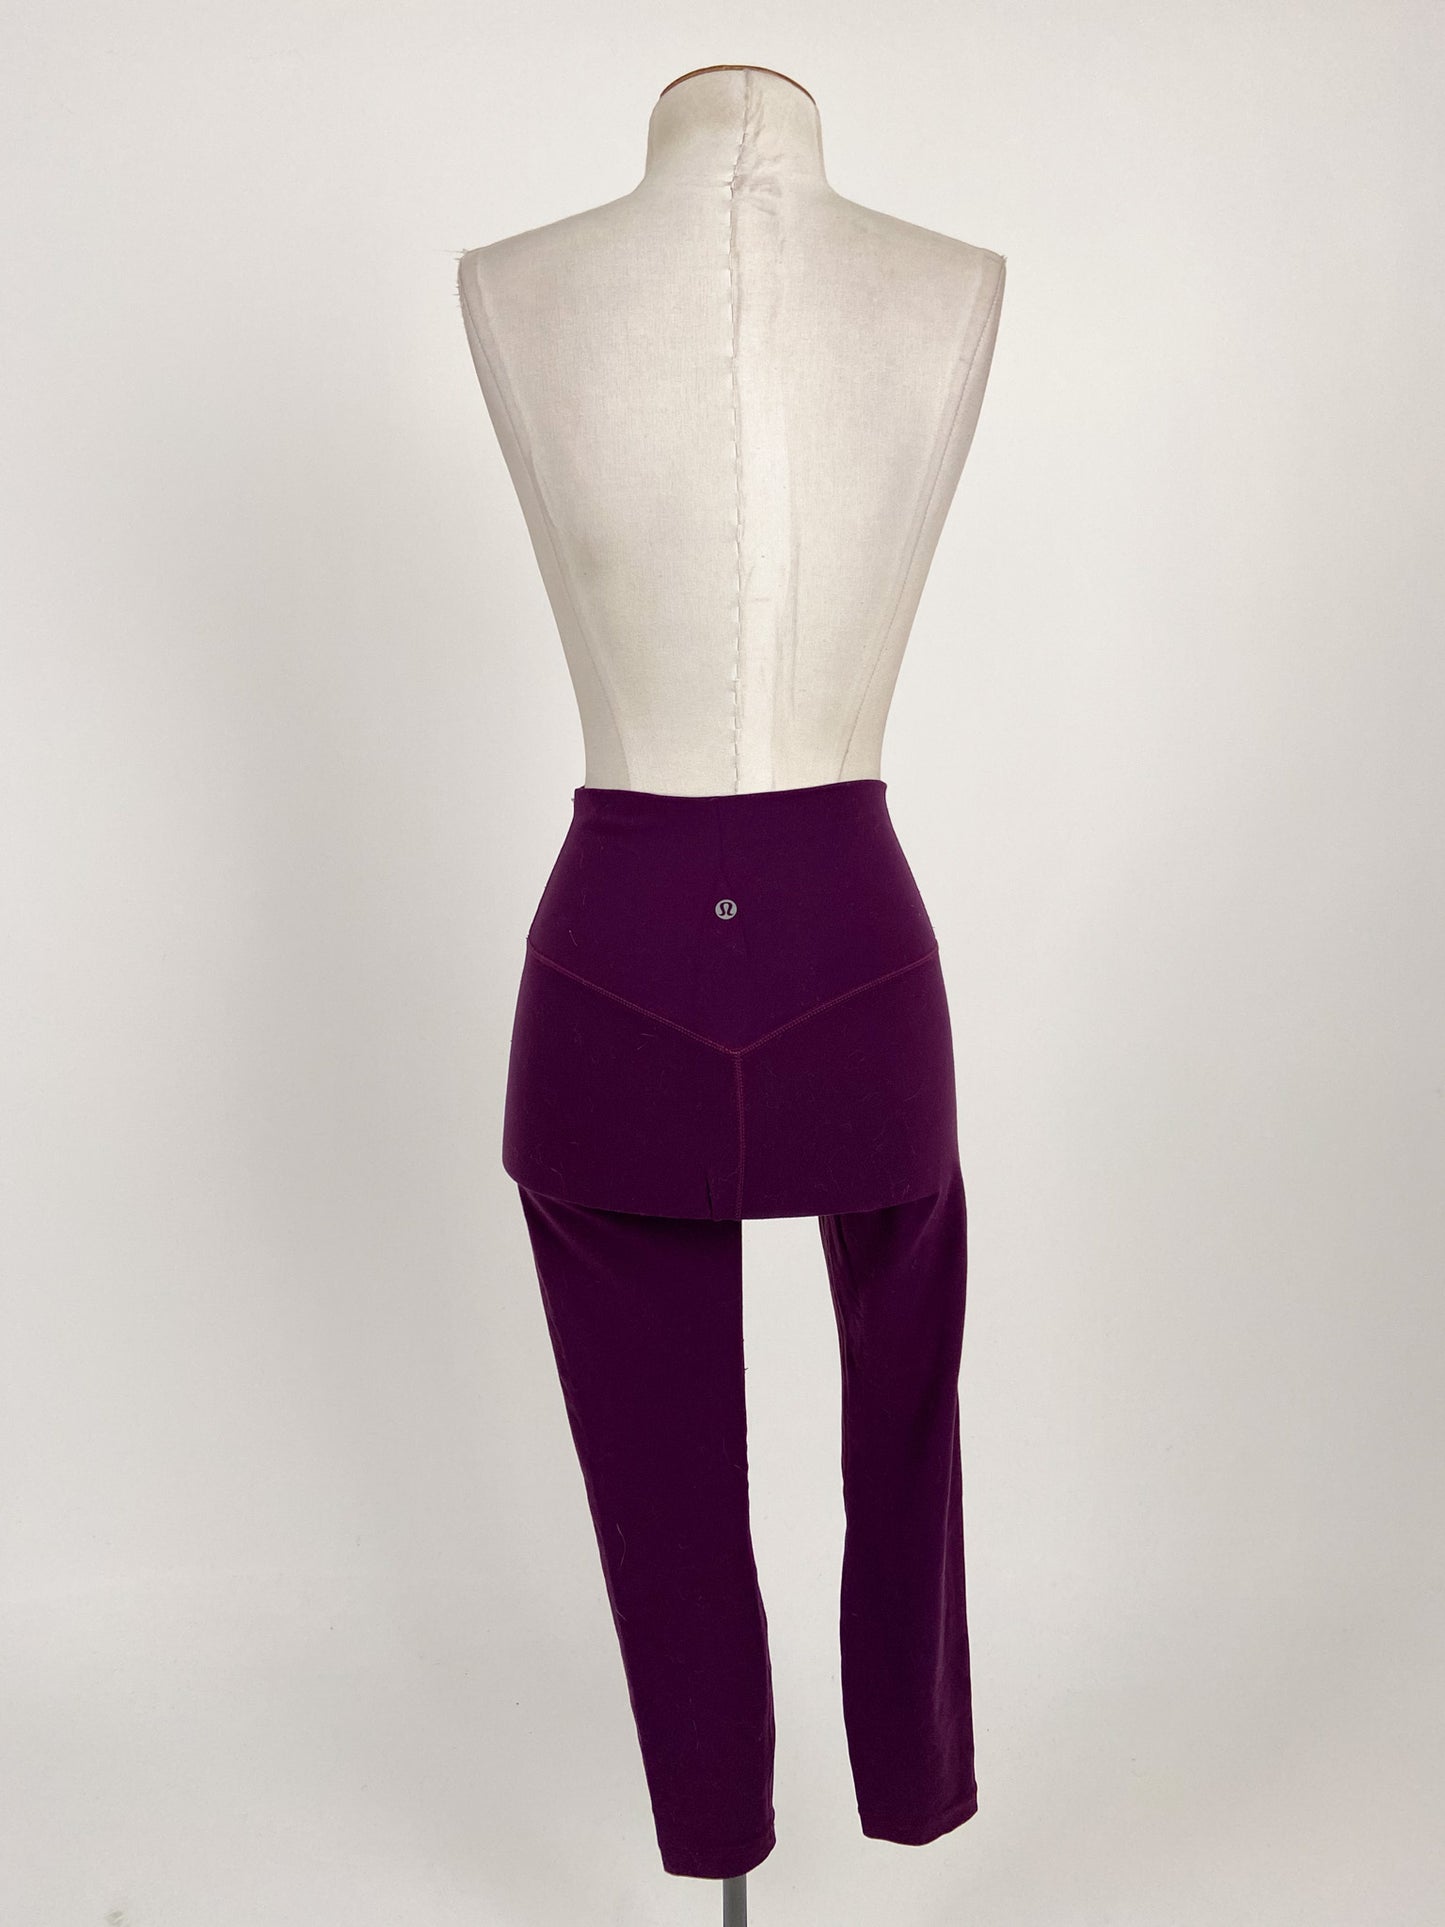 Lululemon | Purple Casual Activewear Bottom | Size 8